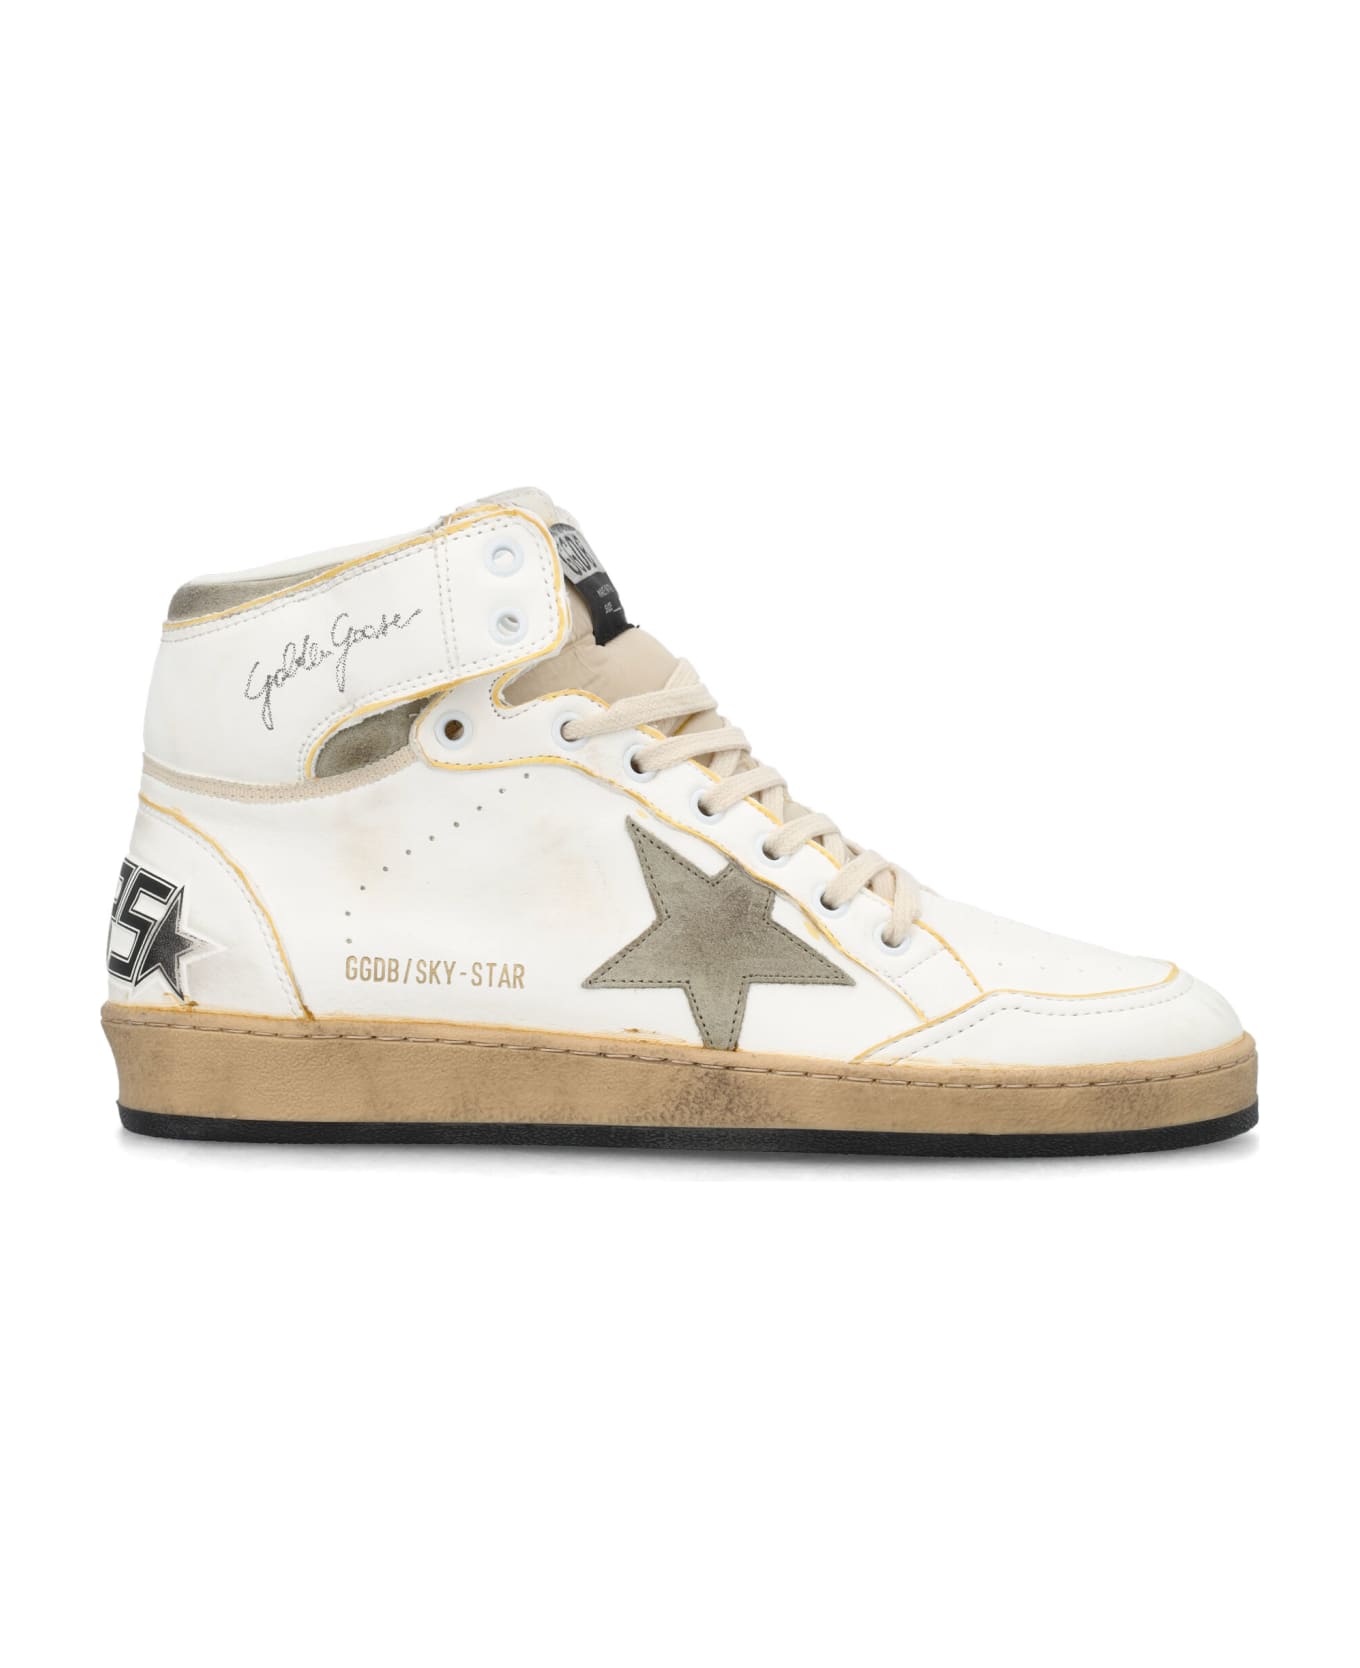 Golden Goose Sky Star Sneakers - White/Taupe スニーカー